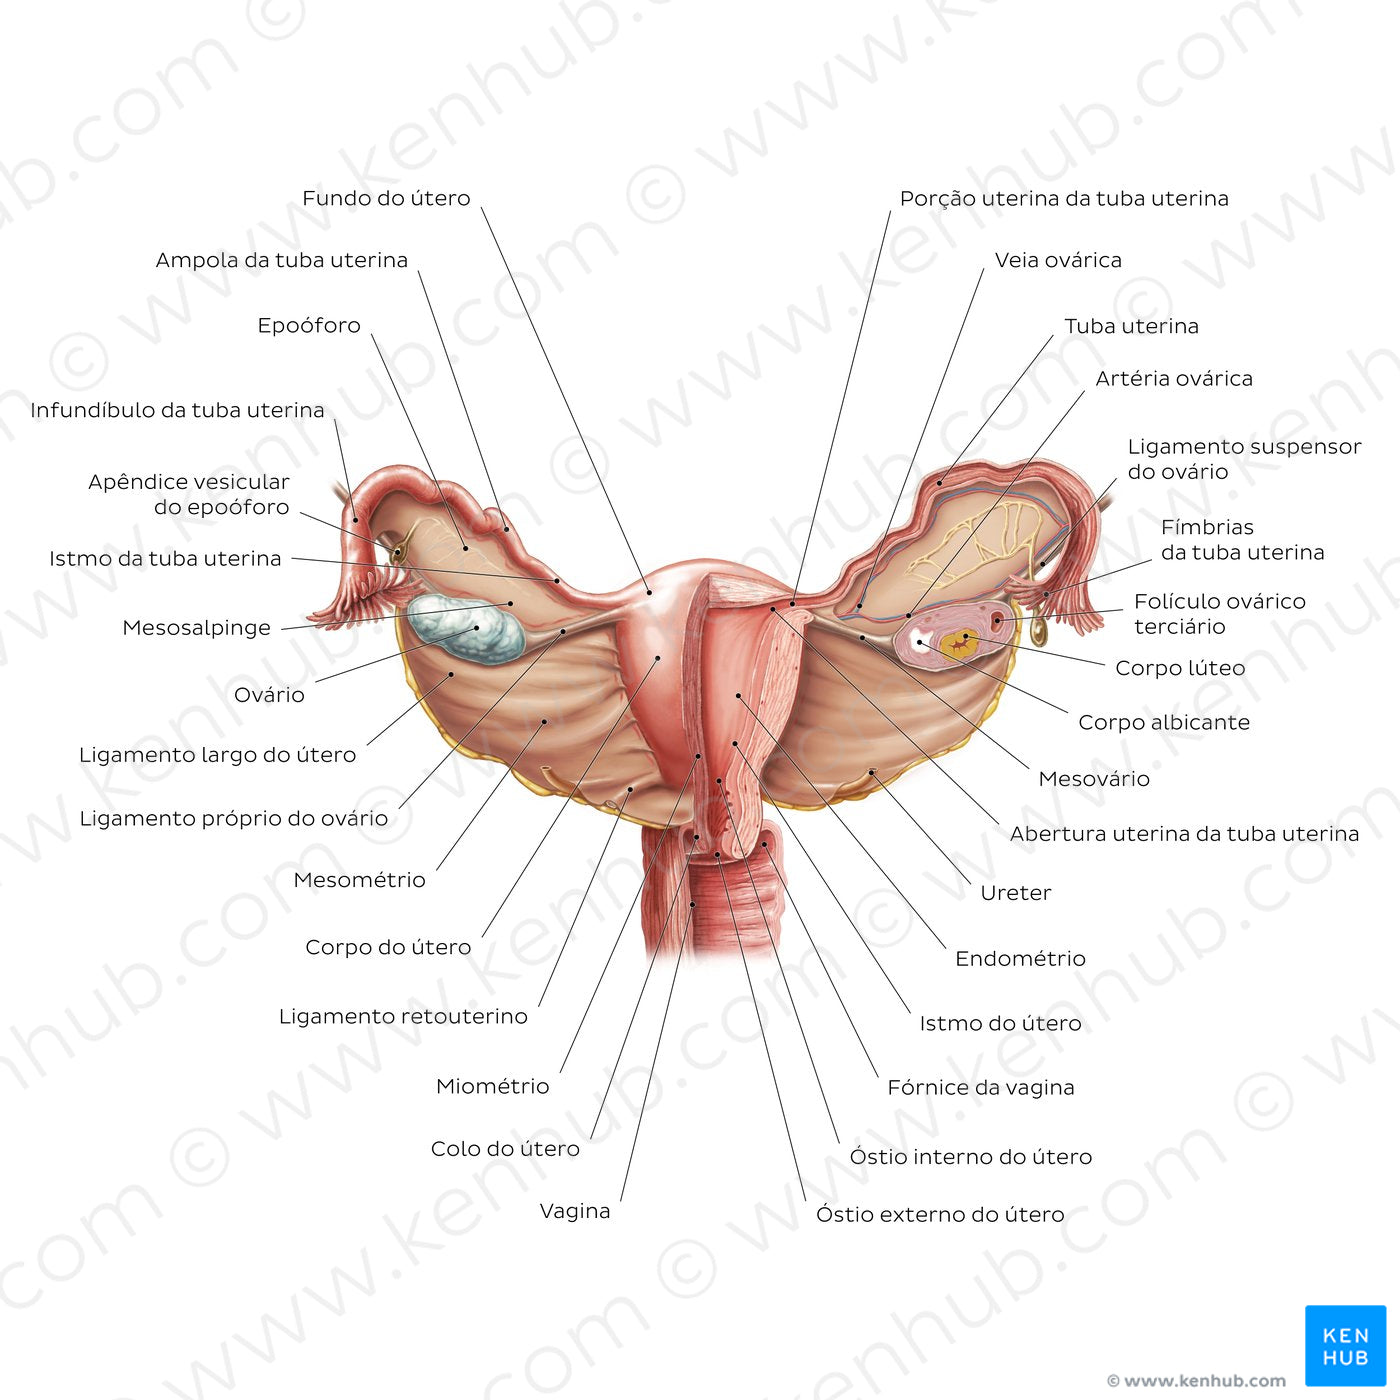 Uterus and ovaries (Portuguese)